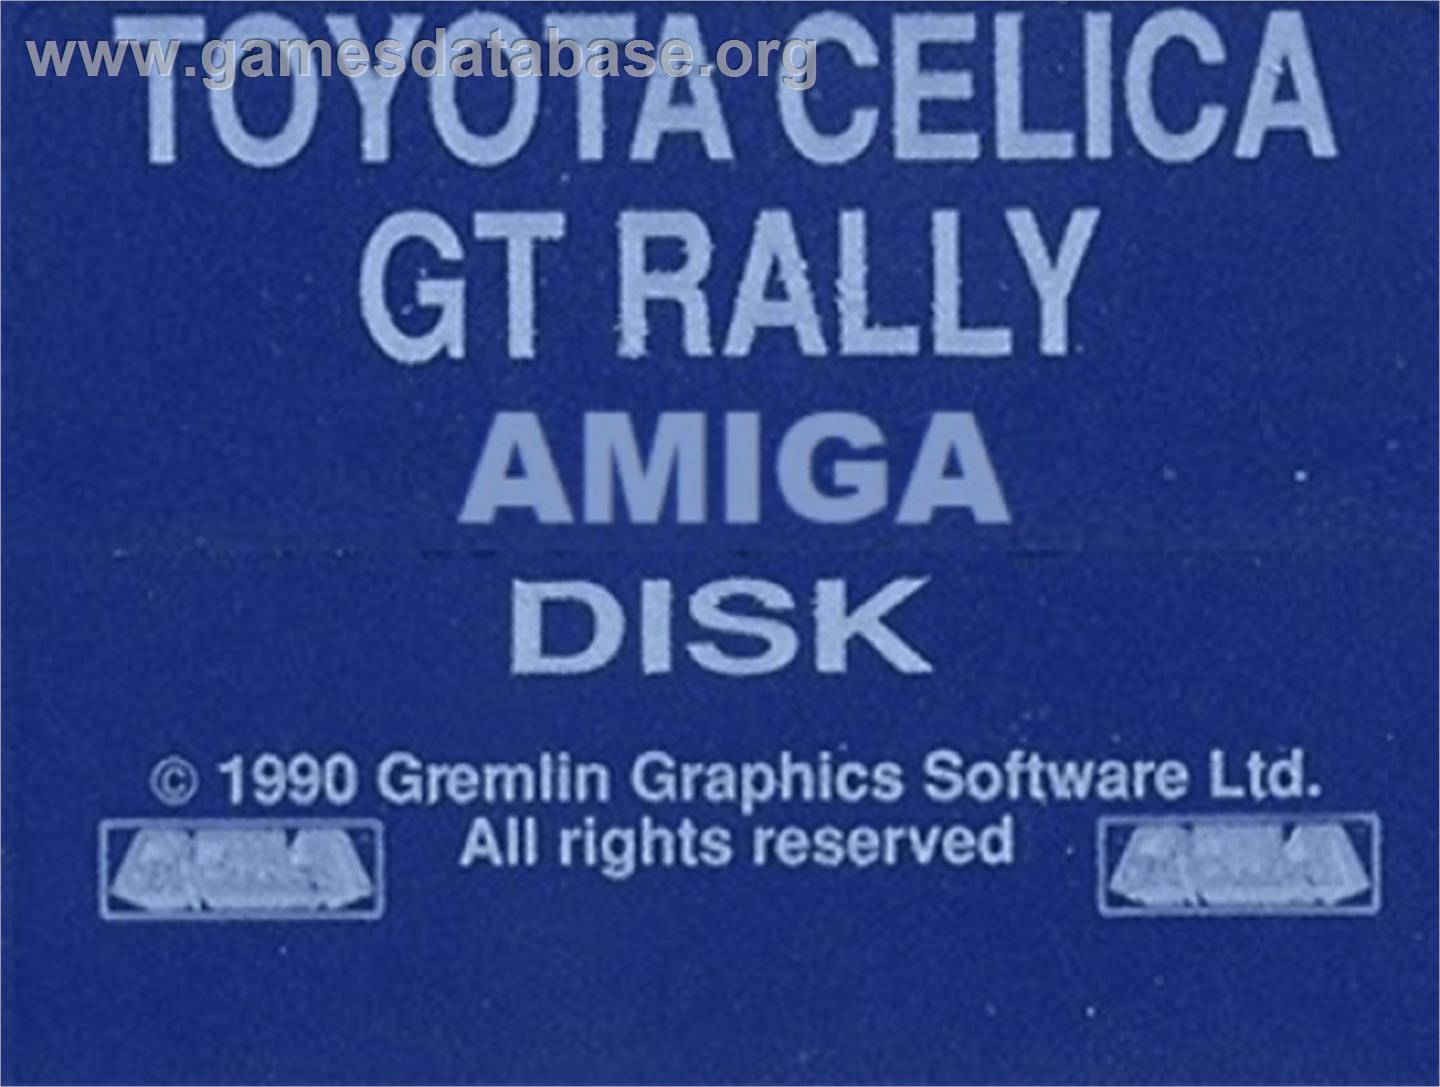 Toyota Celica GT Rally - Commodore Amiga - Artwork - Cartridge Top